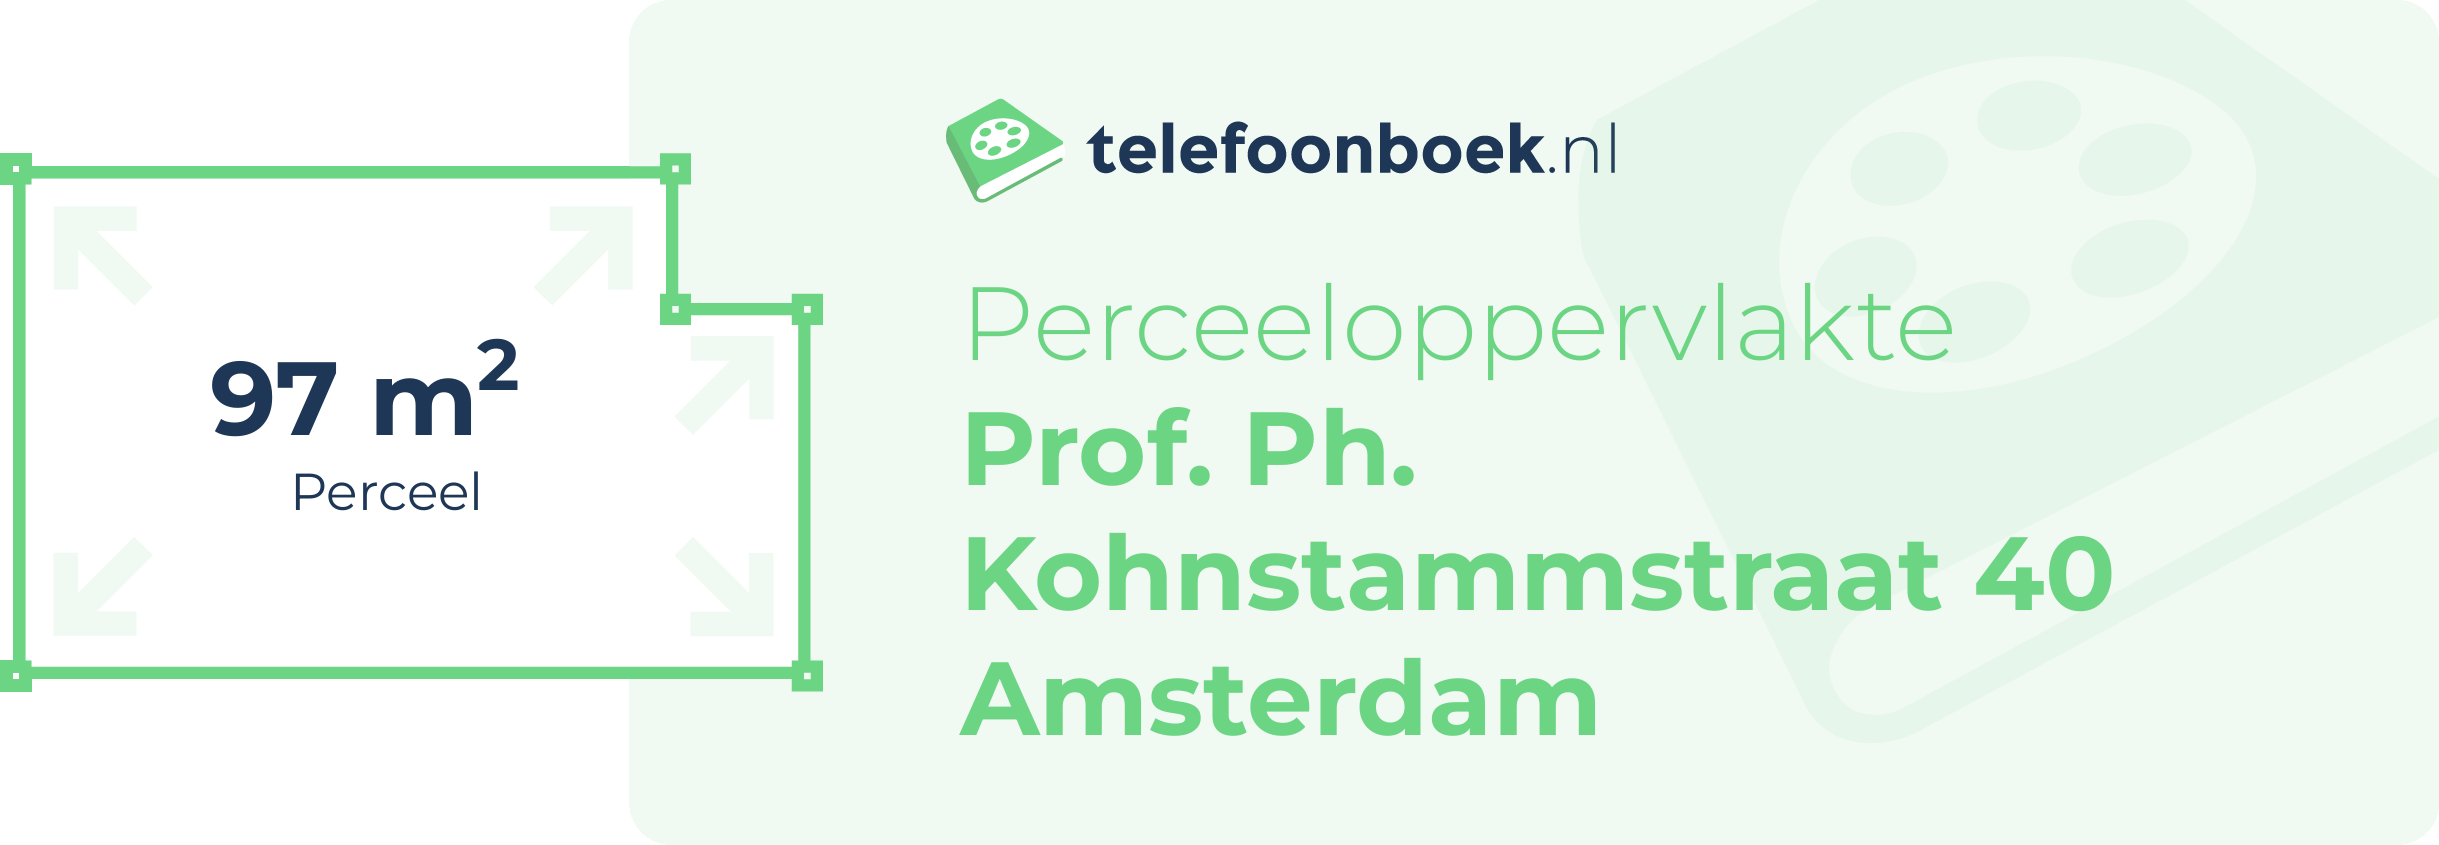 Perceeloppervlakte Prof. Ph. Kohnstammstraat 40 Amsterdam